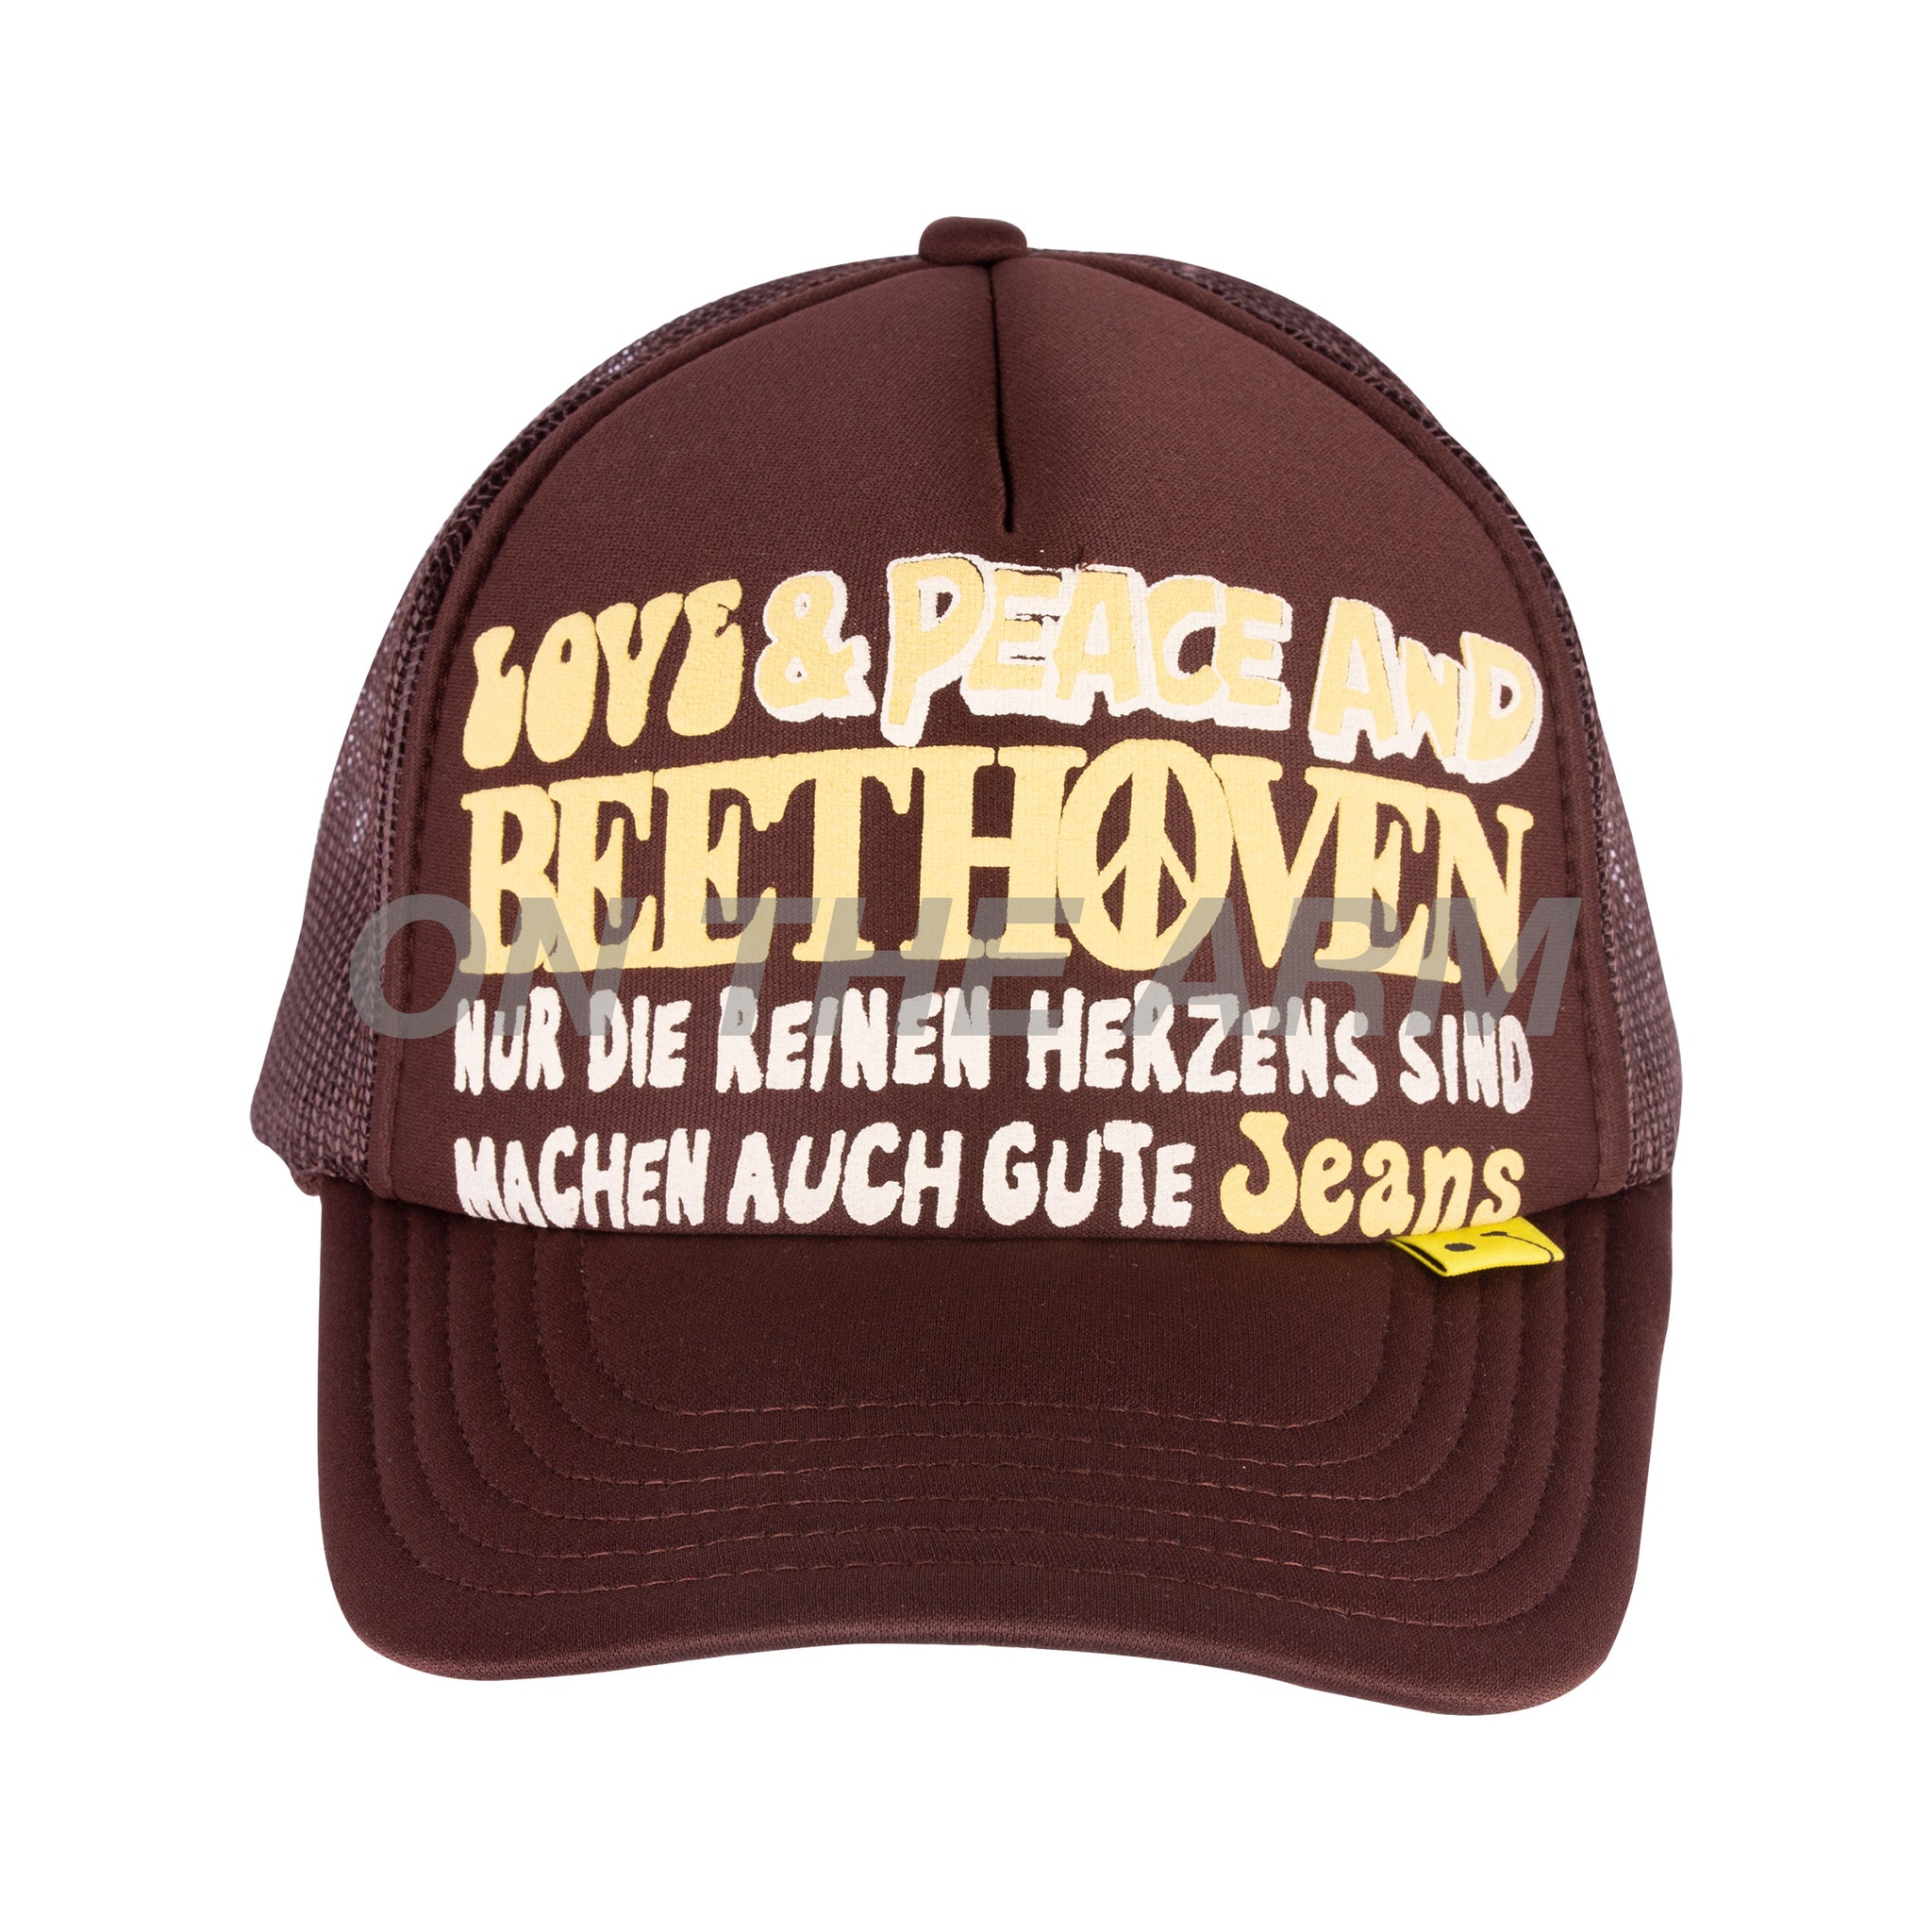 Kapital Brown Beethoven Trucker Hat